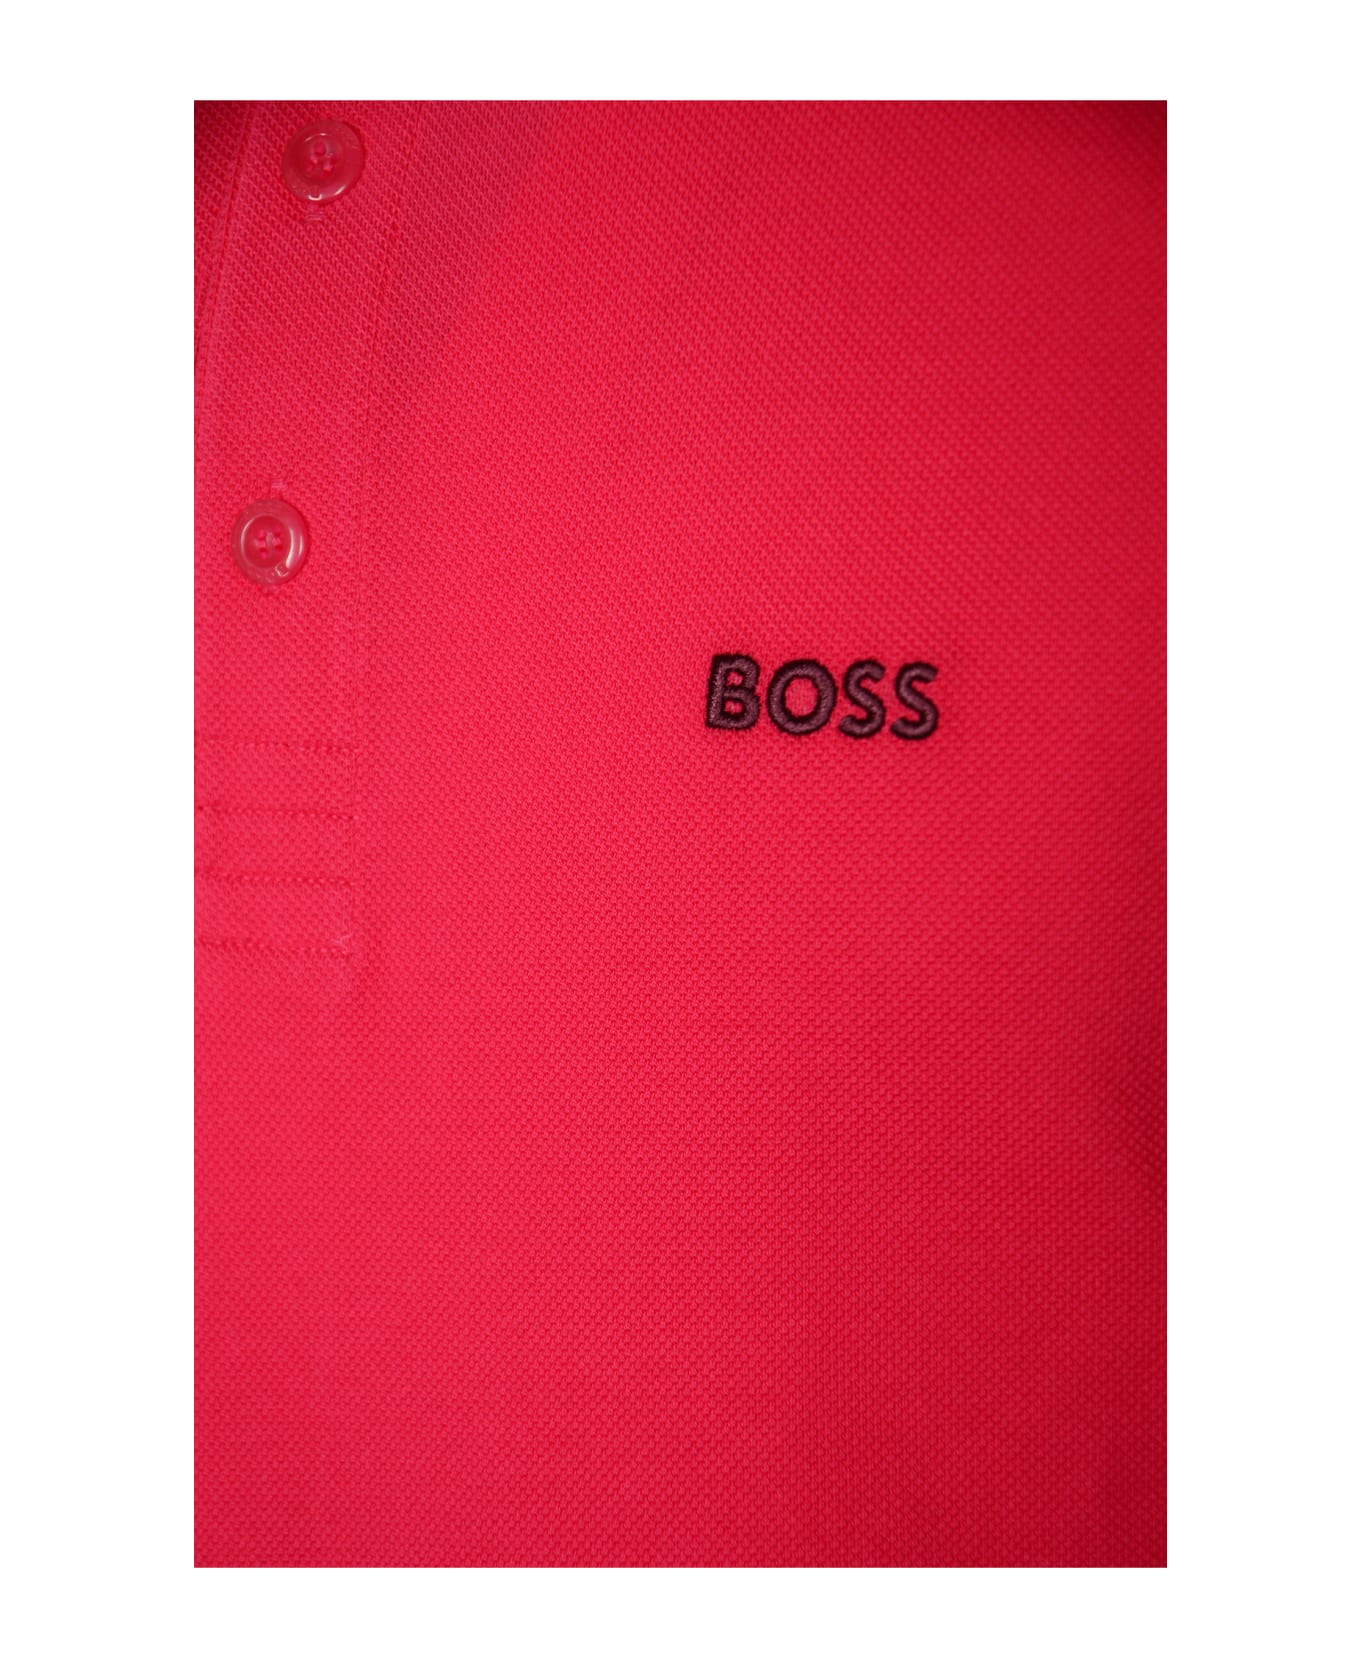 Hugo Boss Paddy Polo Shirt - Open Pink